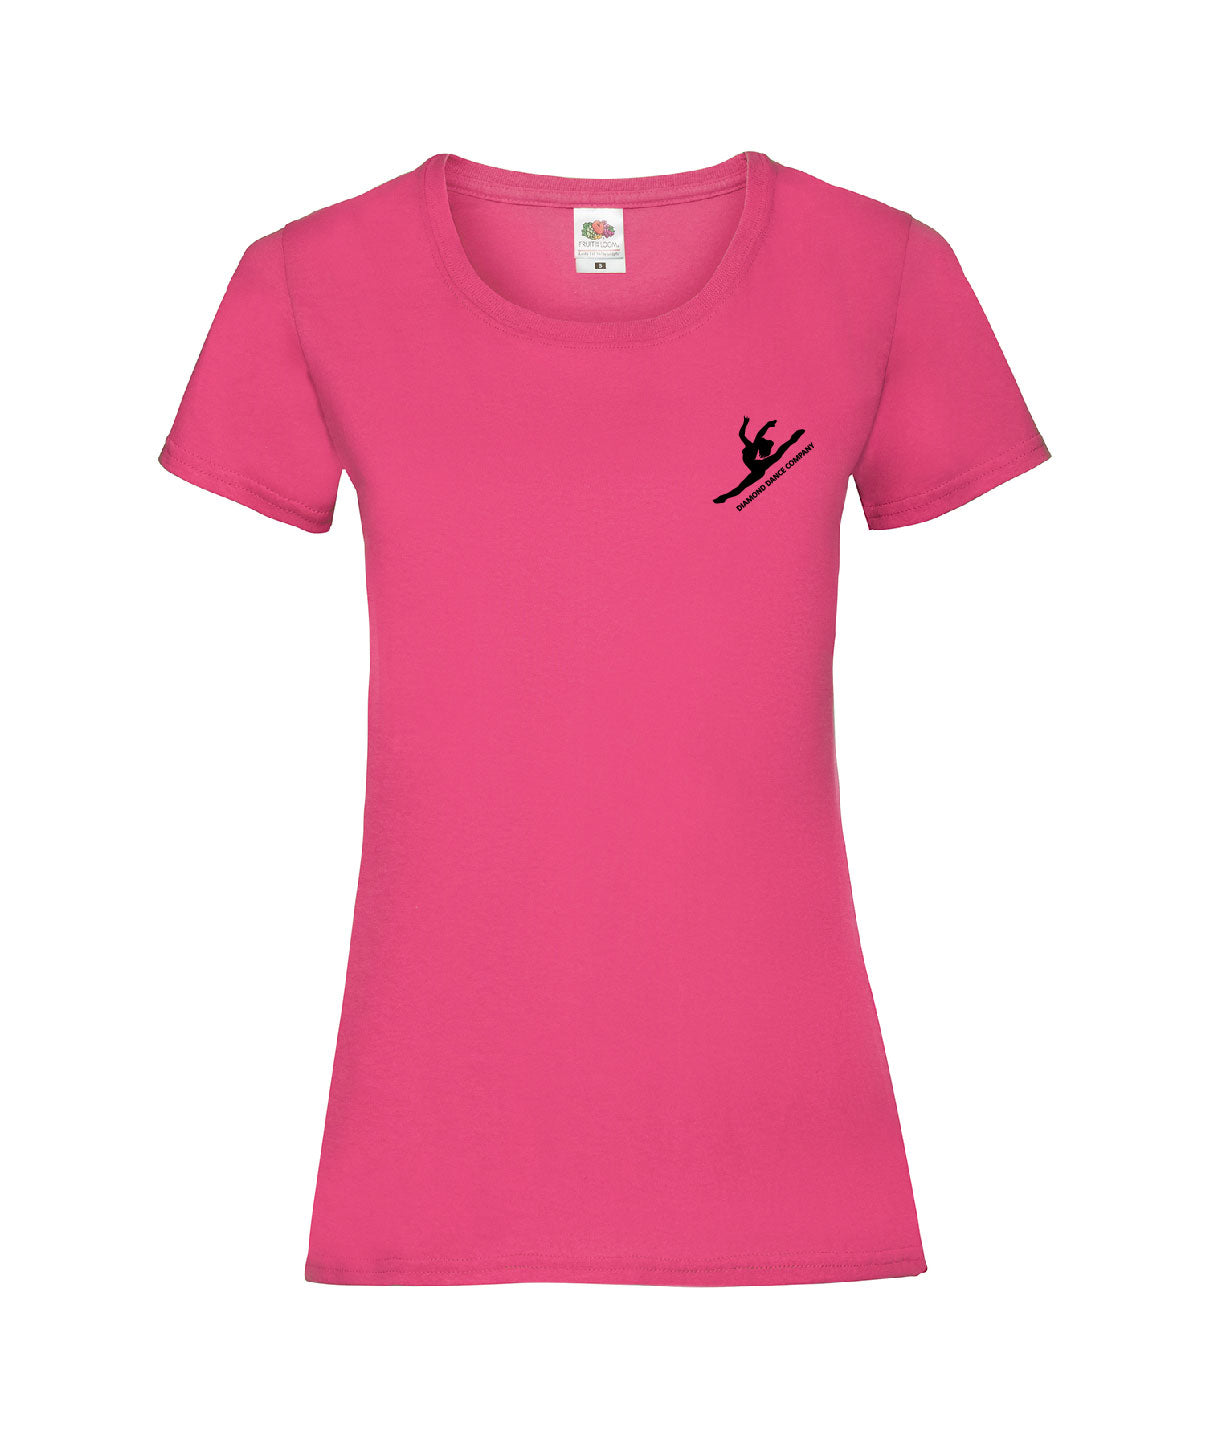 Womens Fitted Pink T-Shirt - Diamond Dance